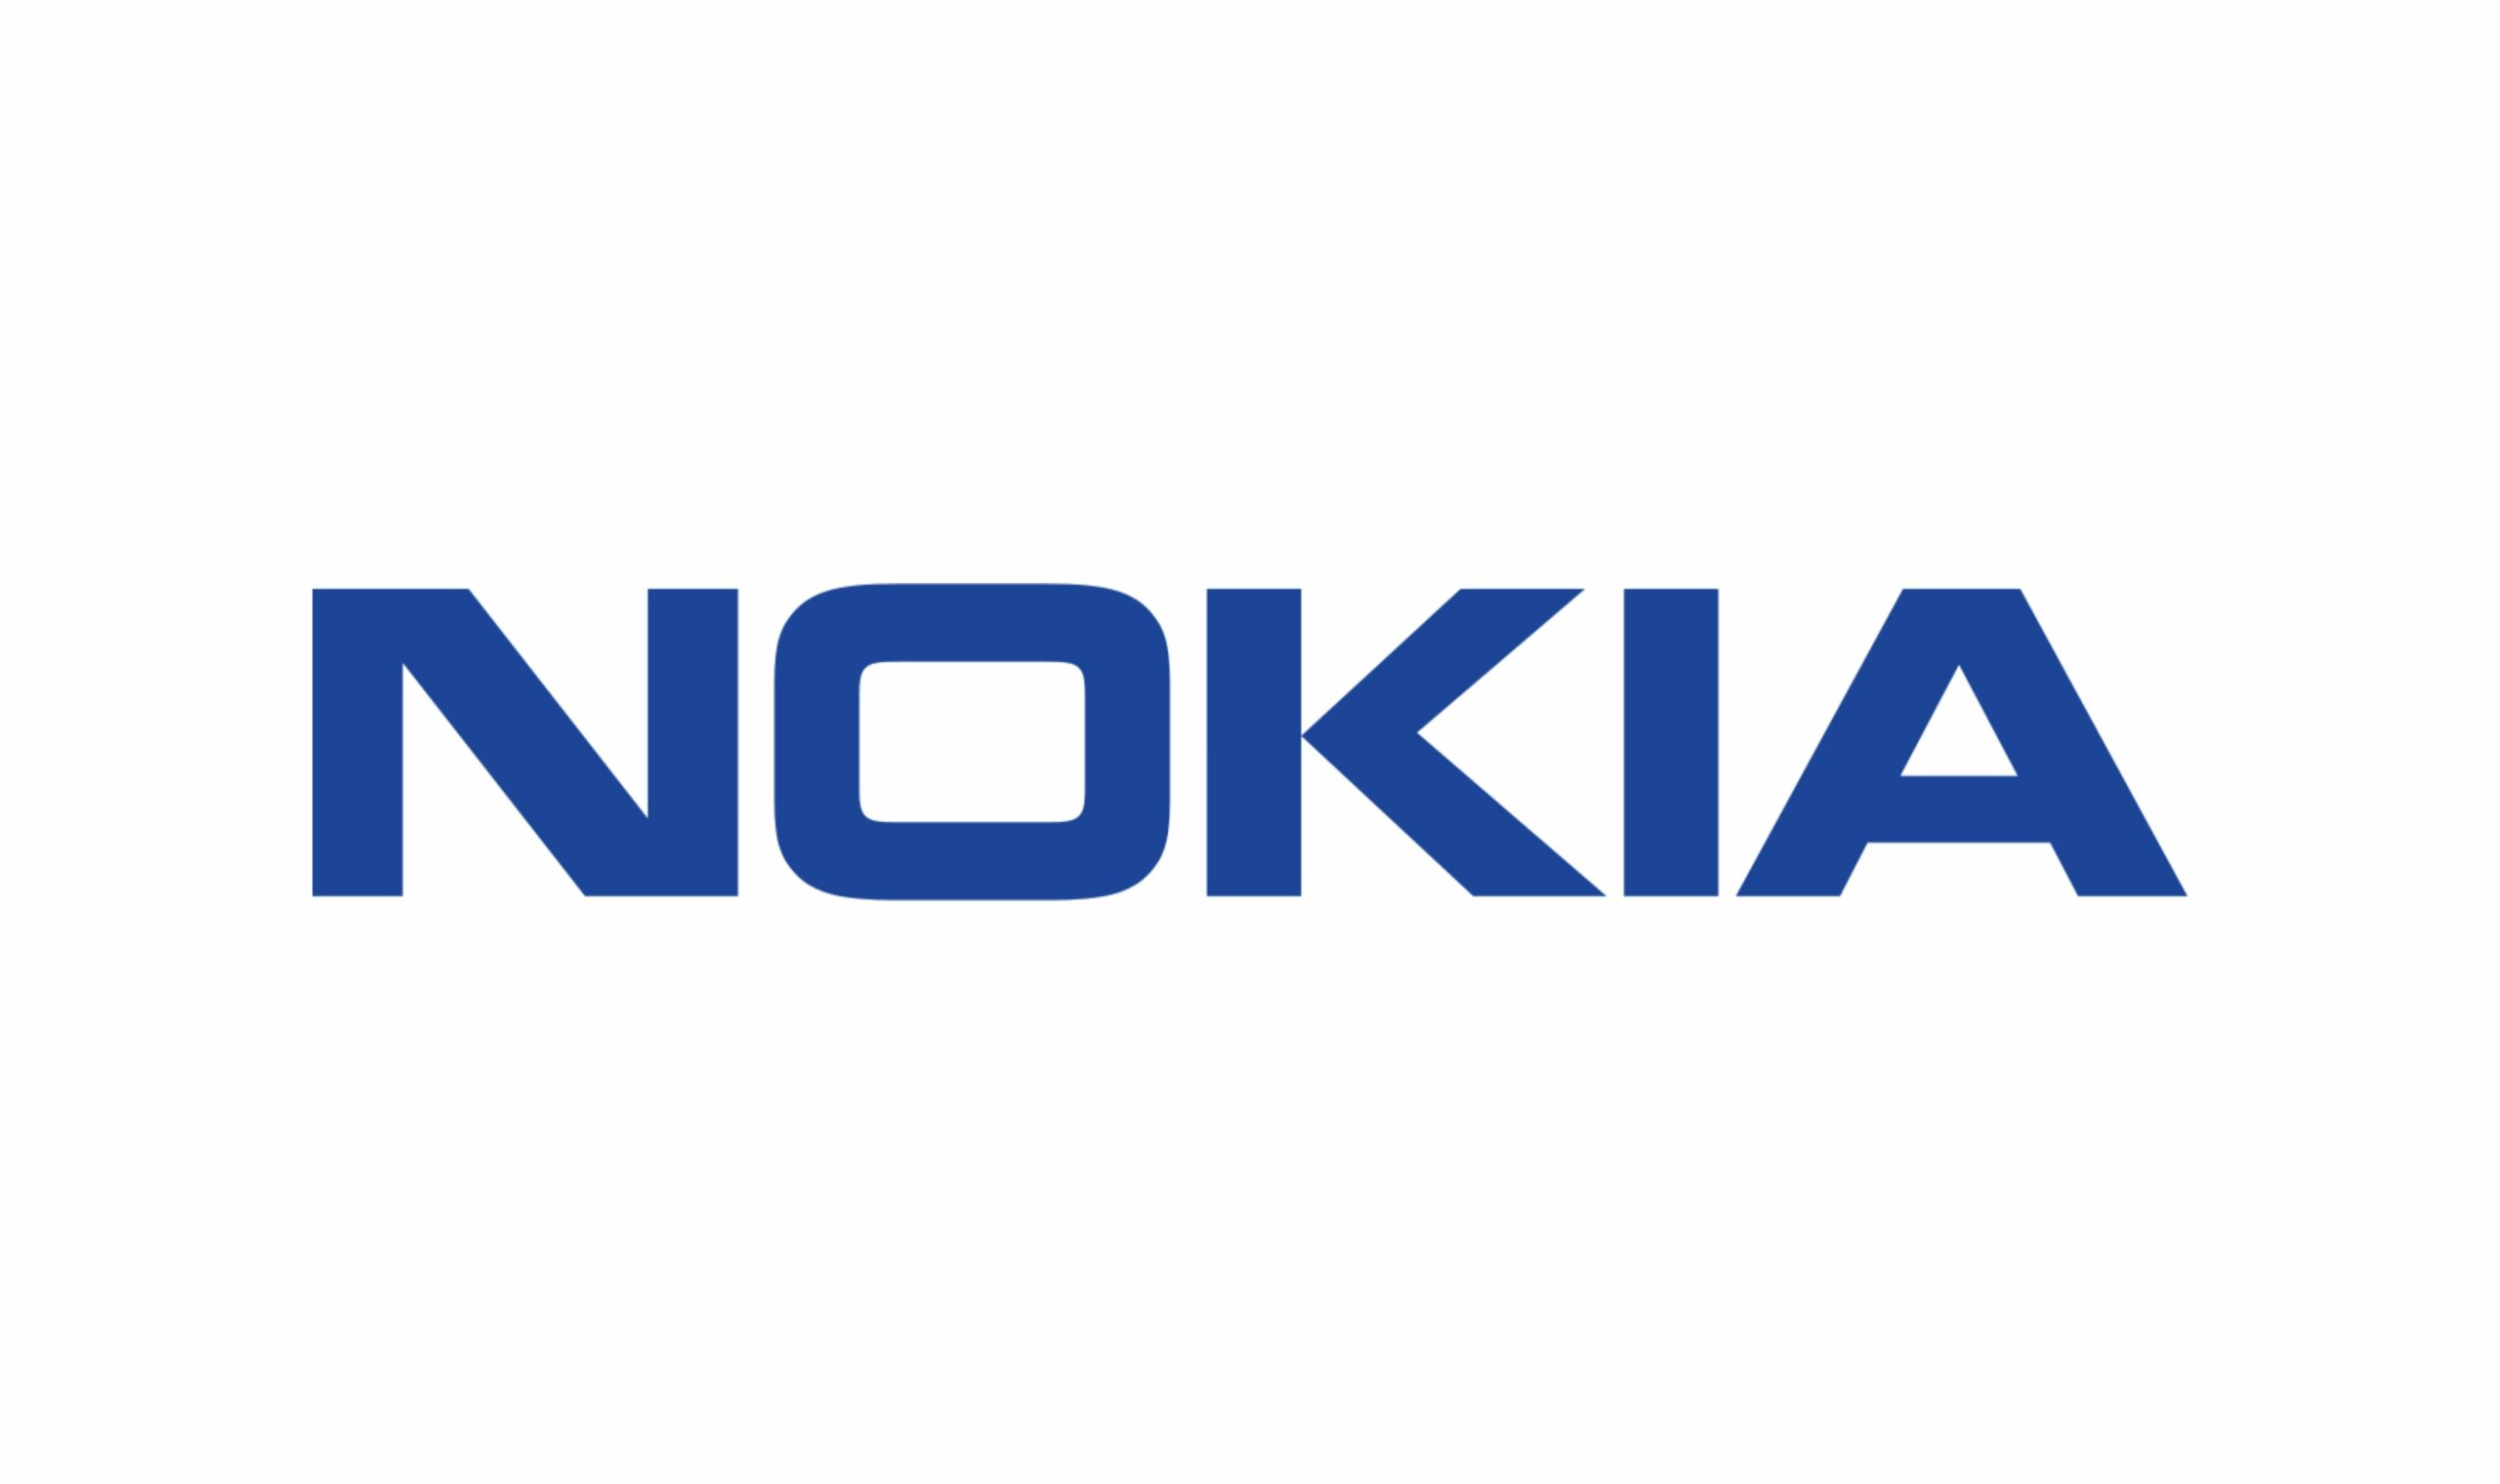 Logotipo de Nokia destacado